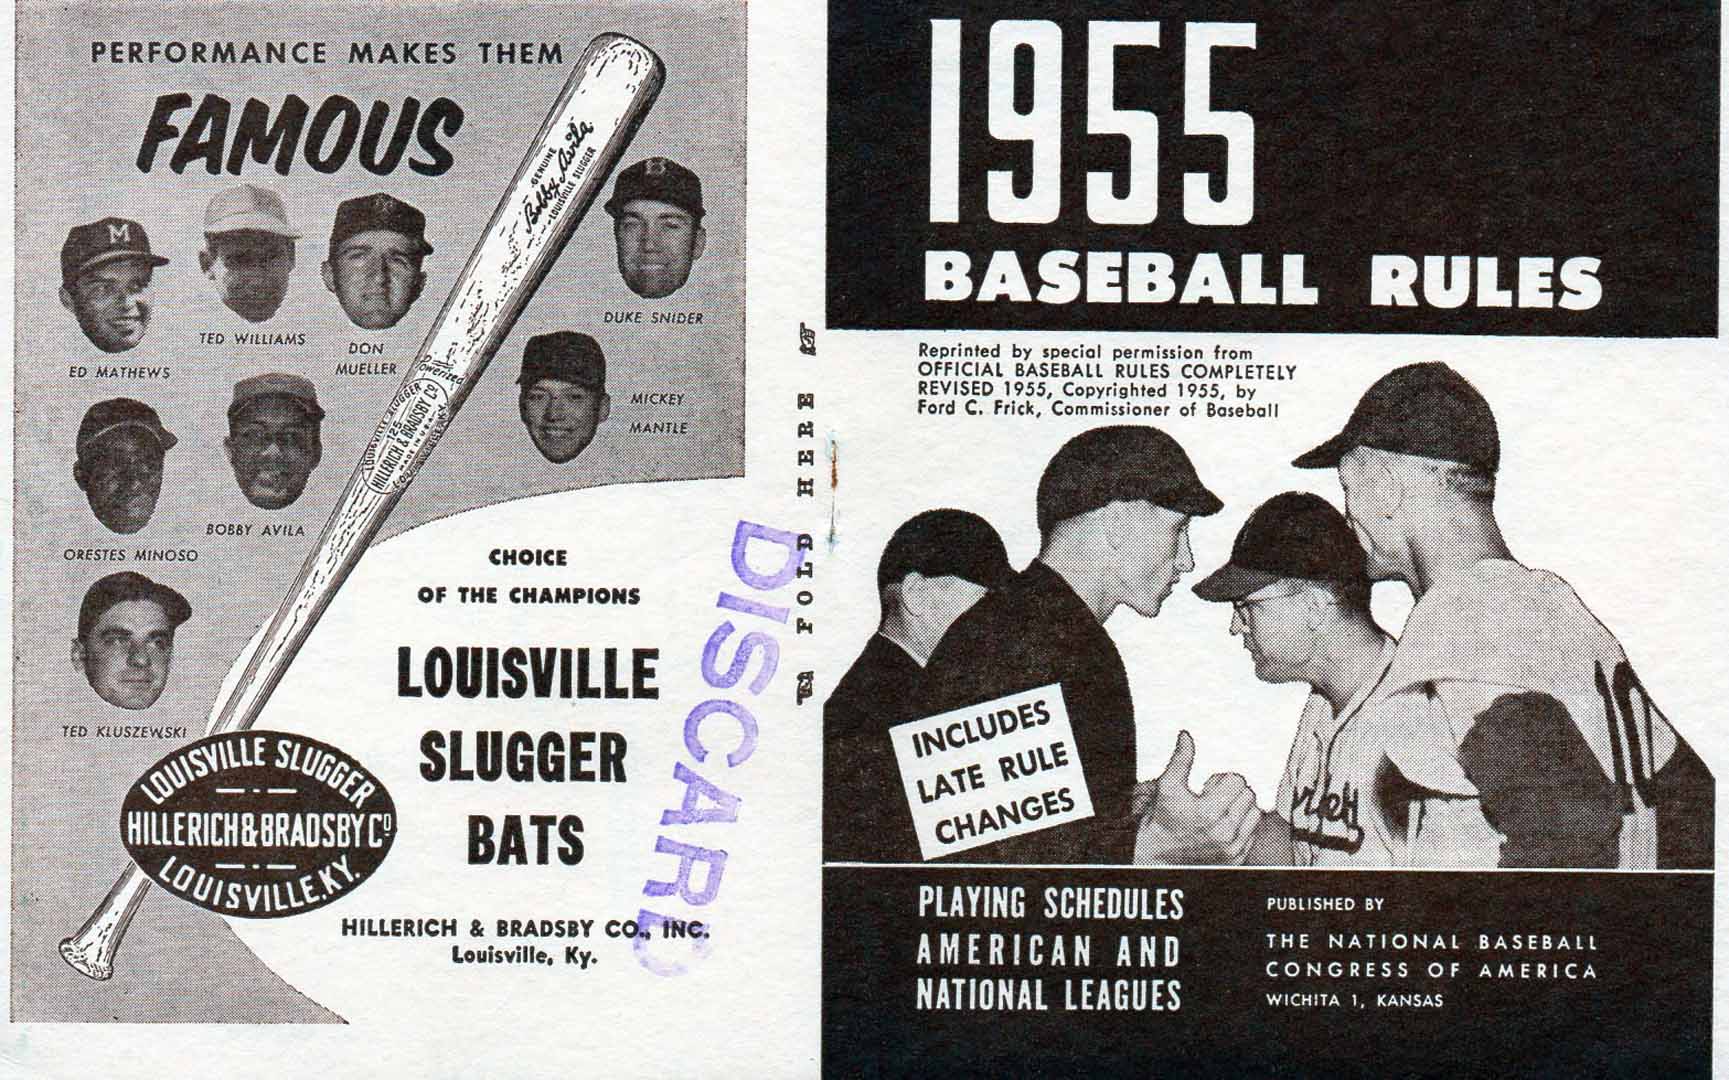 1955 national baseball congress official baseball annual